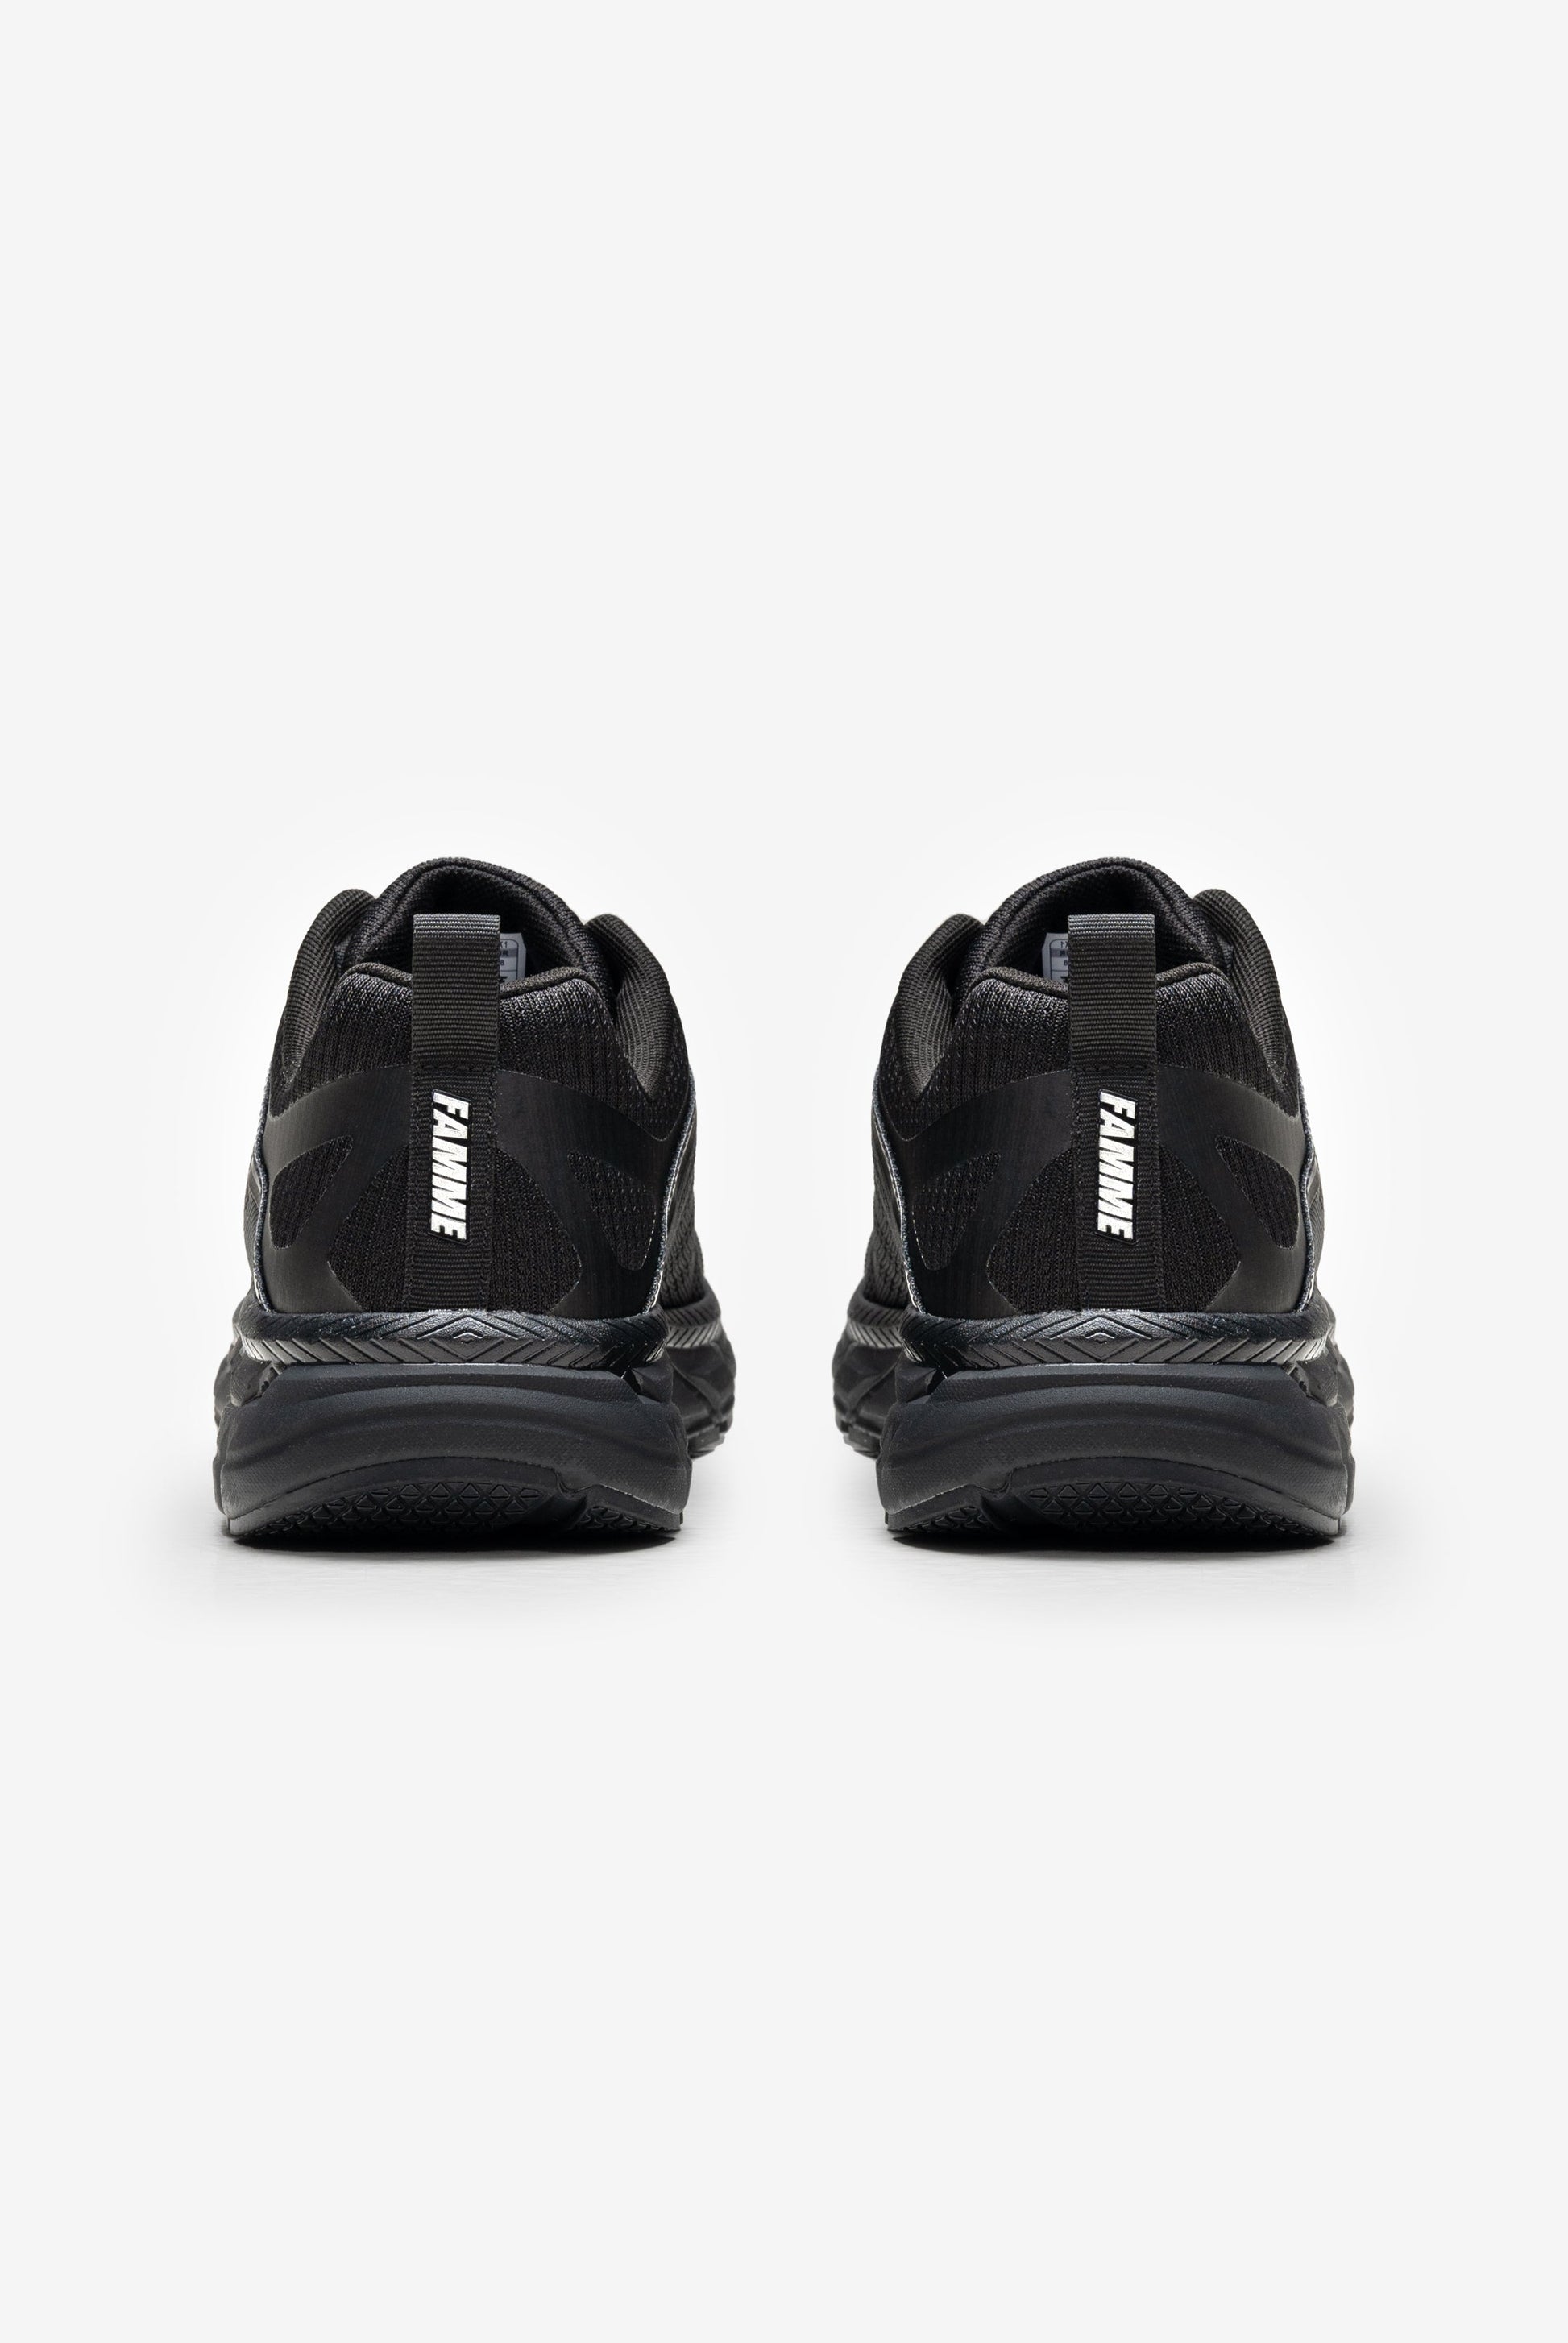 Triple Black Endorphin RX1 Shoes - for dame - Famme - Shoes